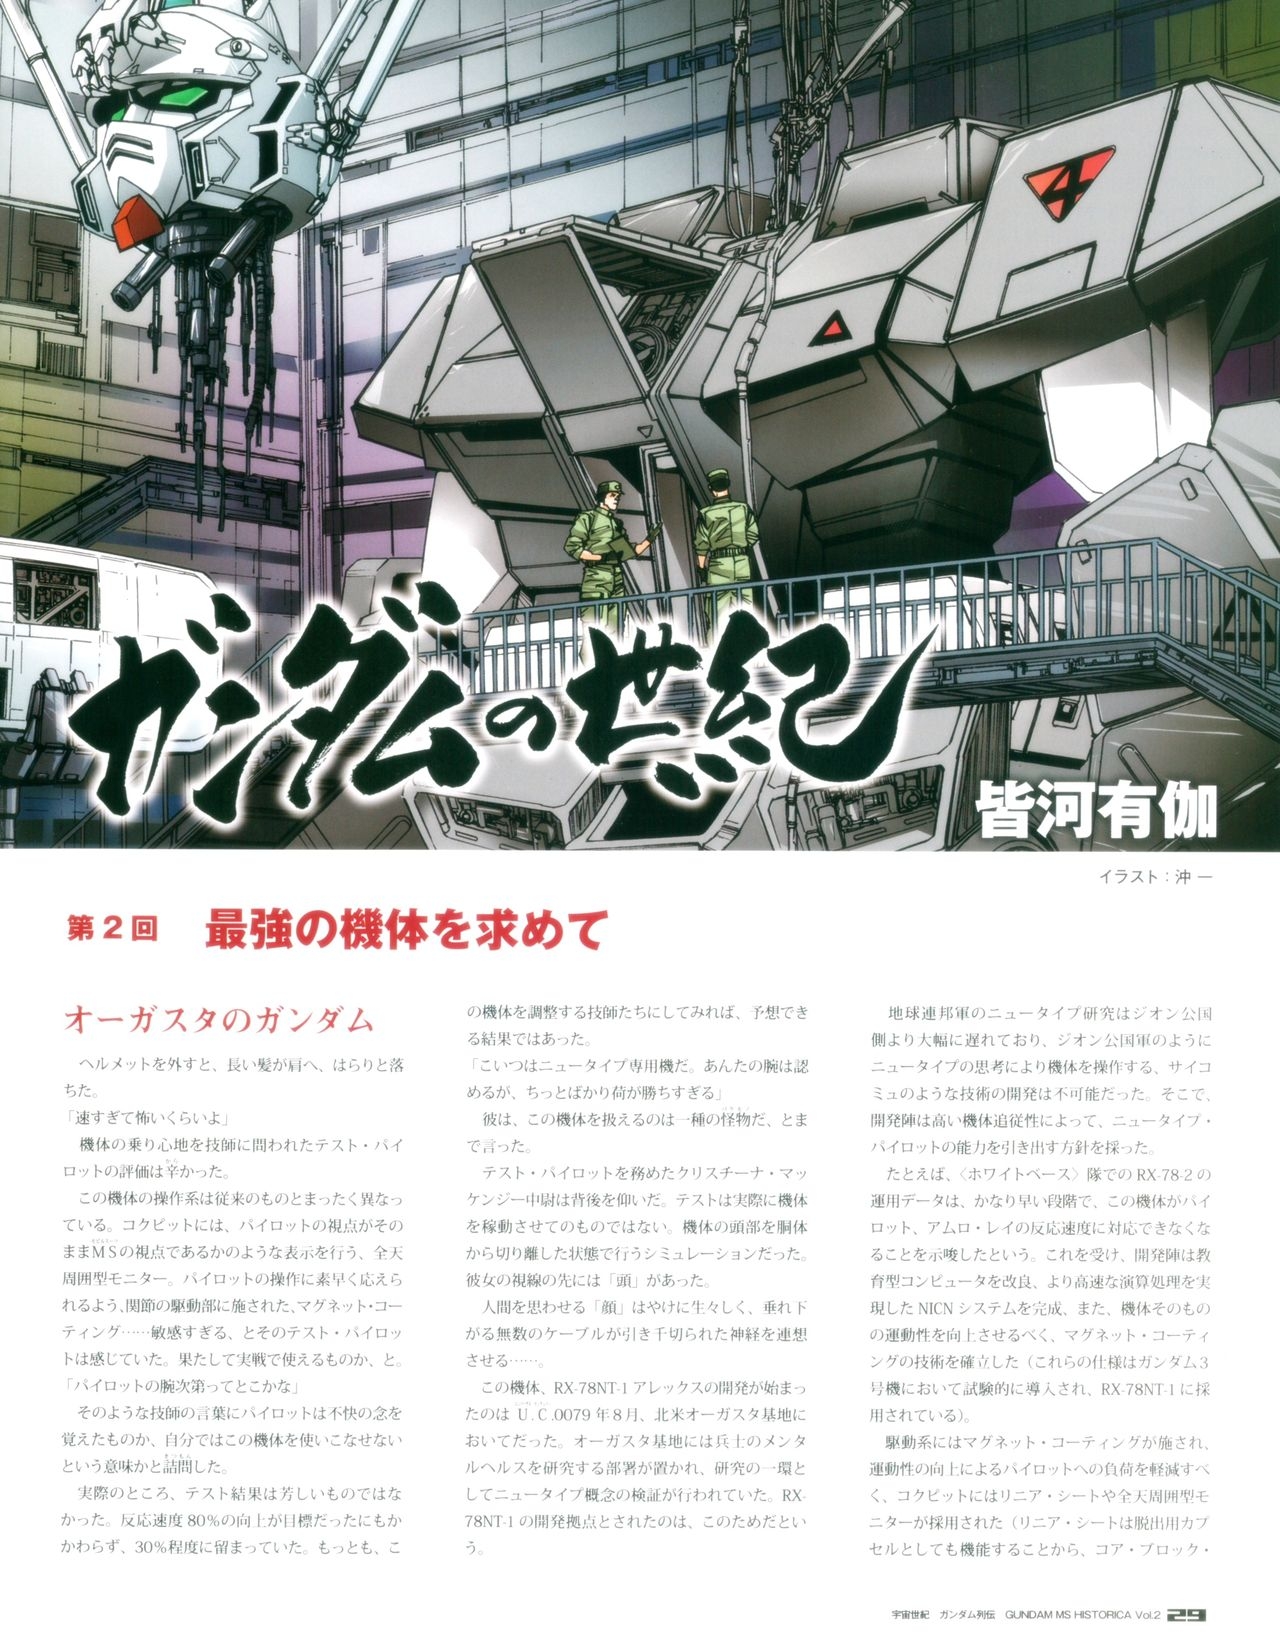 Gundam - MS Historica Vol.2 28